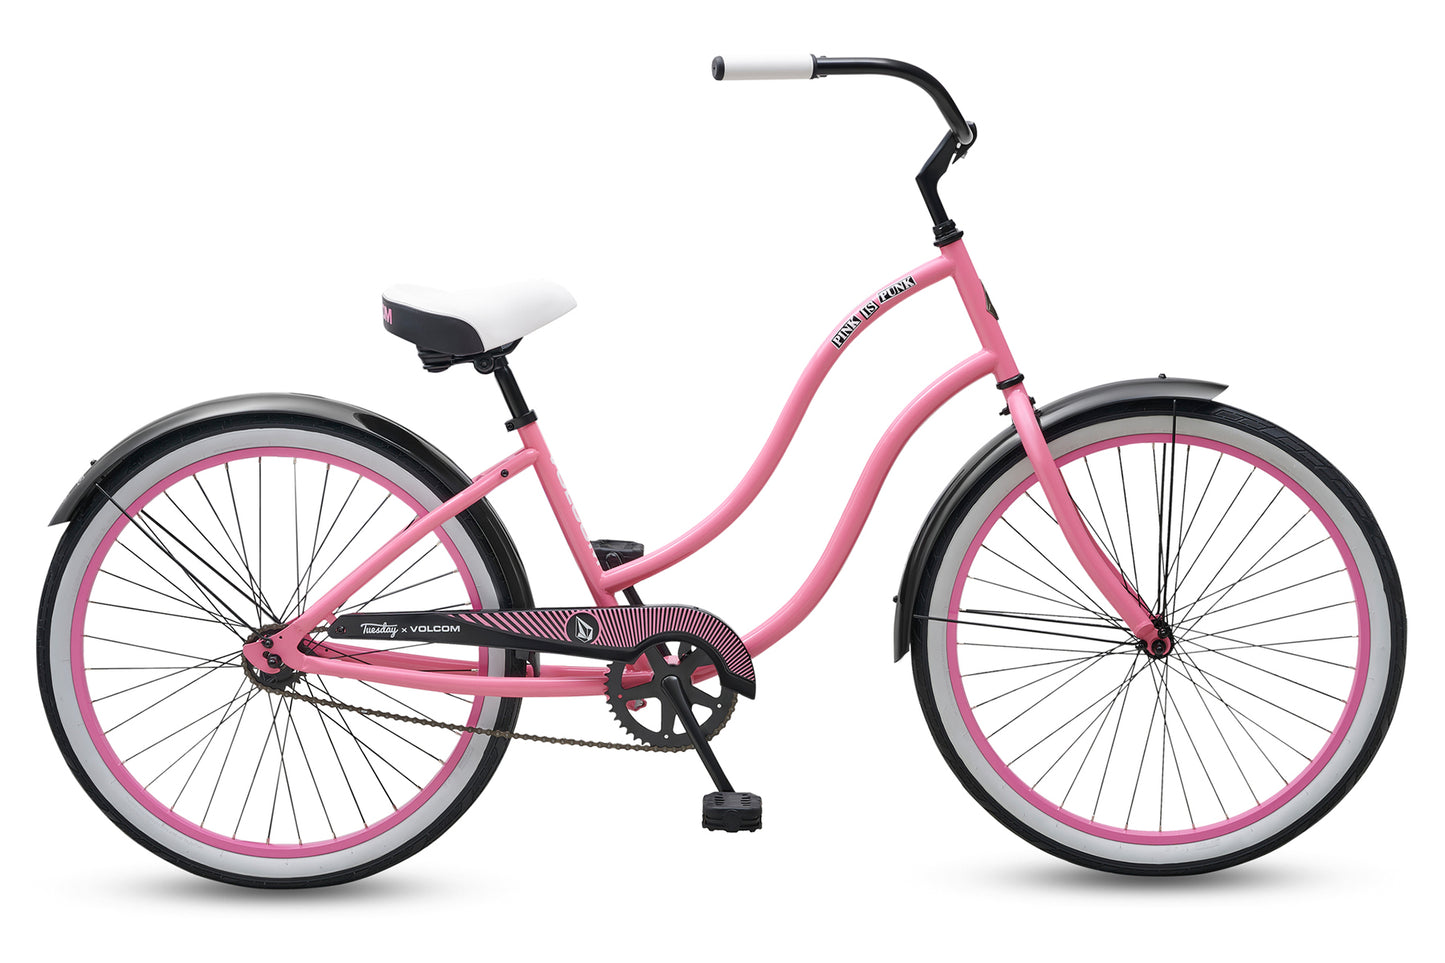 Tuesday X Volcom 16" Cruiser Bike - Womens - Pink Pink 41cm (16") 